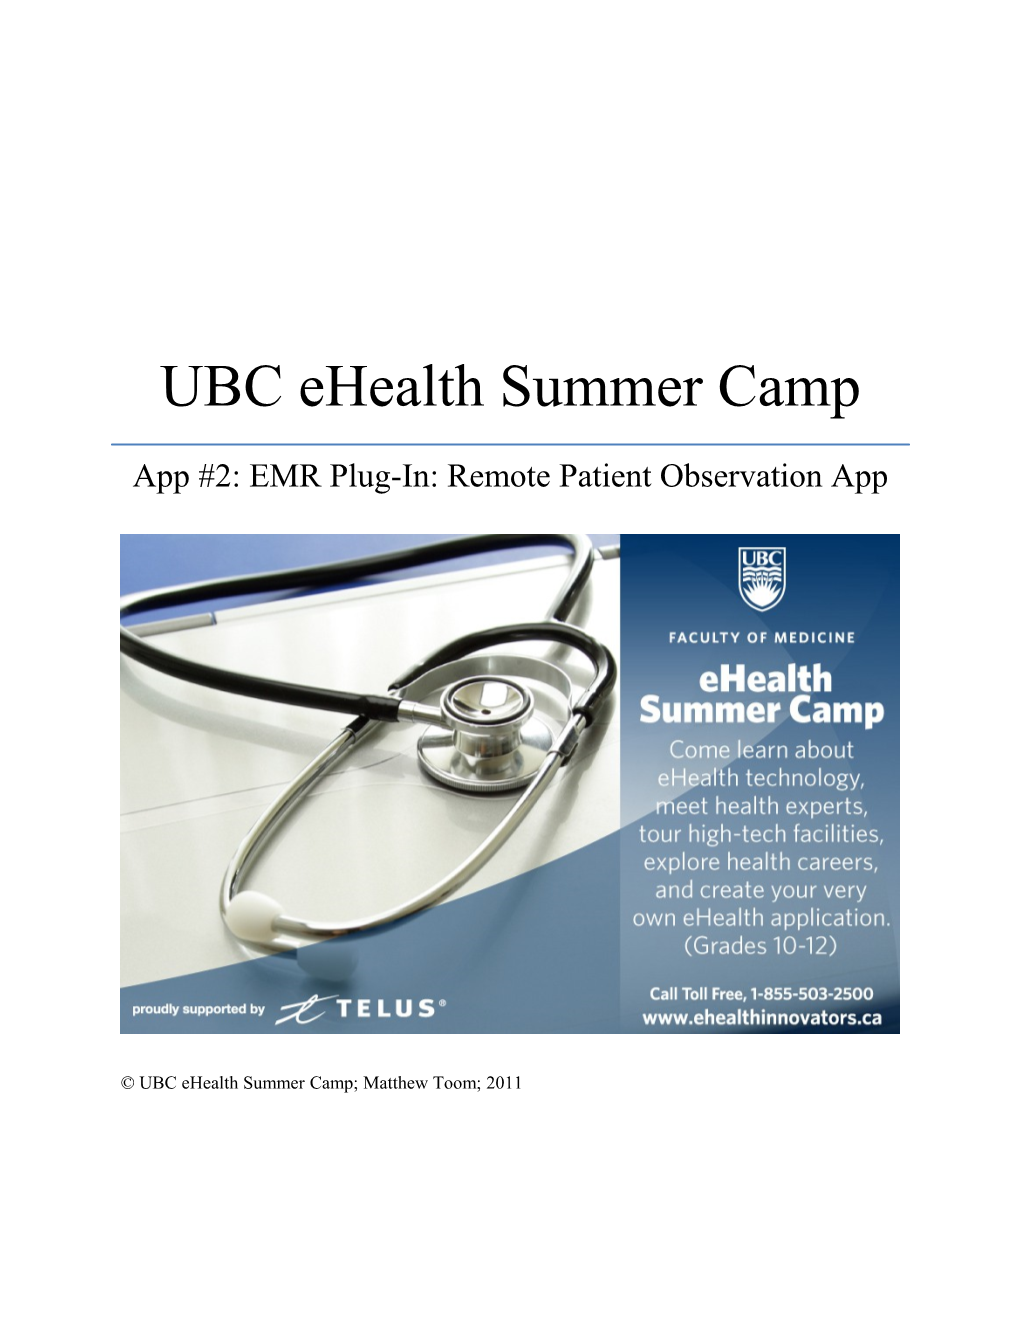 UBC Ehealth Summer Camp